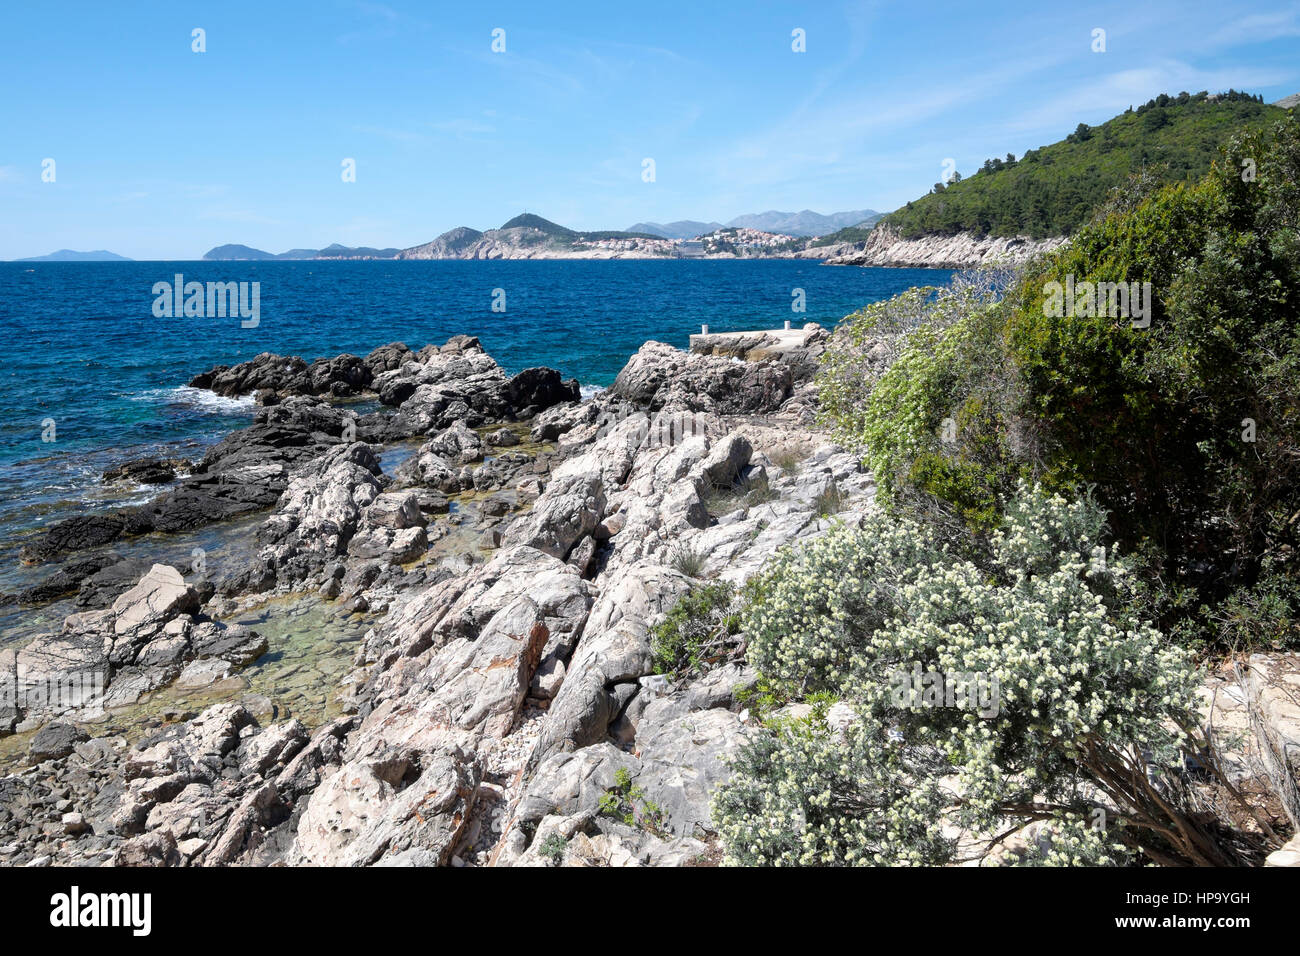 The Dalmatian coast  from Lockum Island, Dubrovnik, Dubrovnik-Neretva County, Dalmatian coast, Adriatic Sea, Croatia, Balkans, Europe Stock Photo